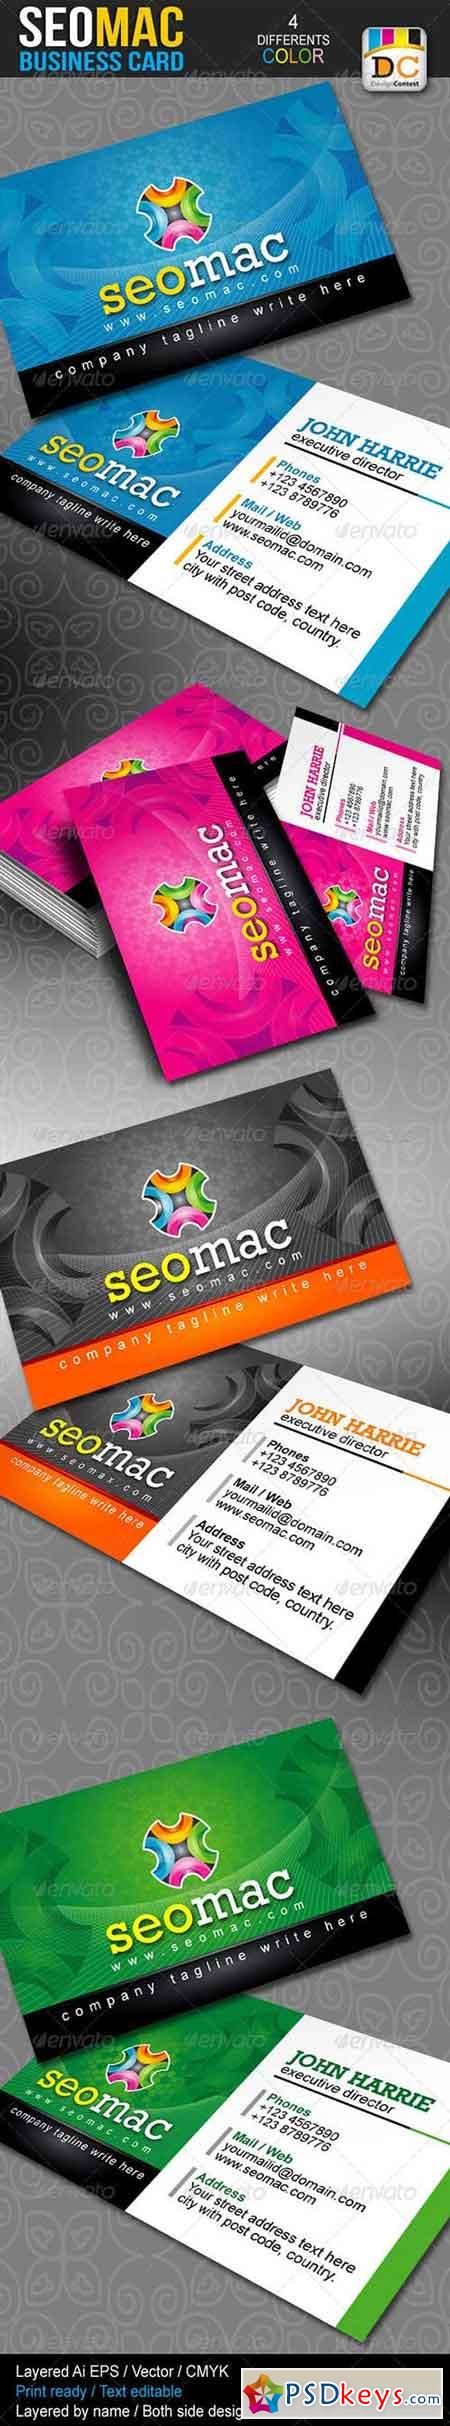 Seo Mac Corporate Business Cards 3101898